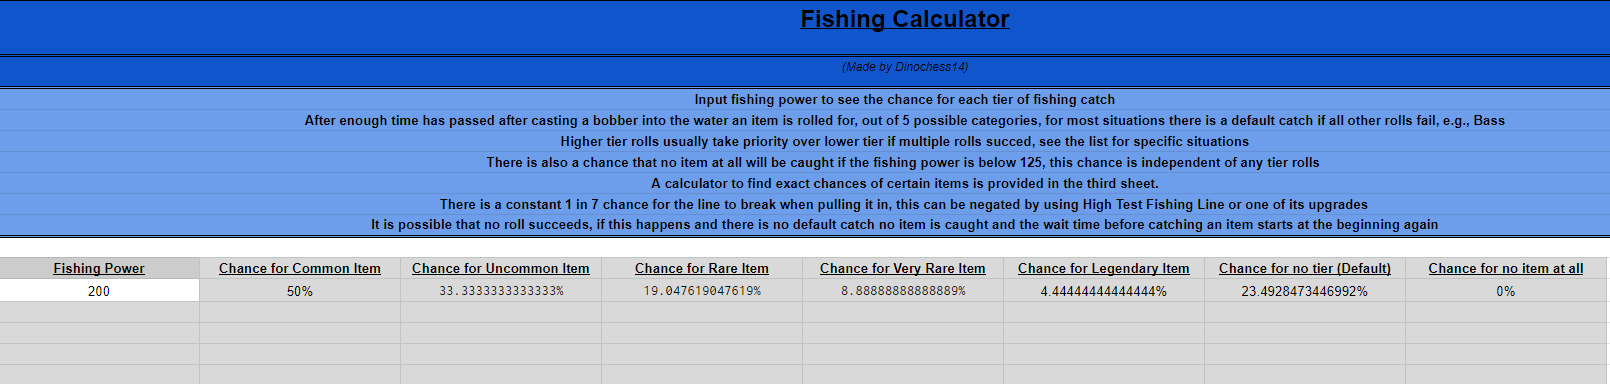 fishingcalcualtorsheet1.png